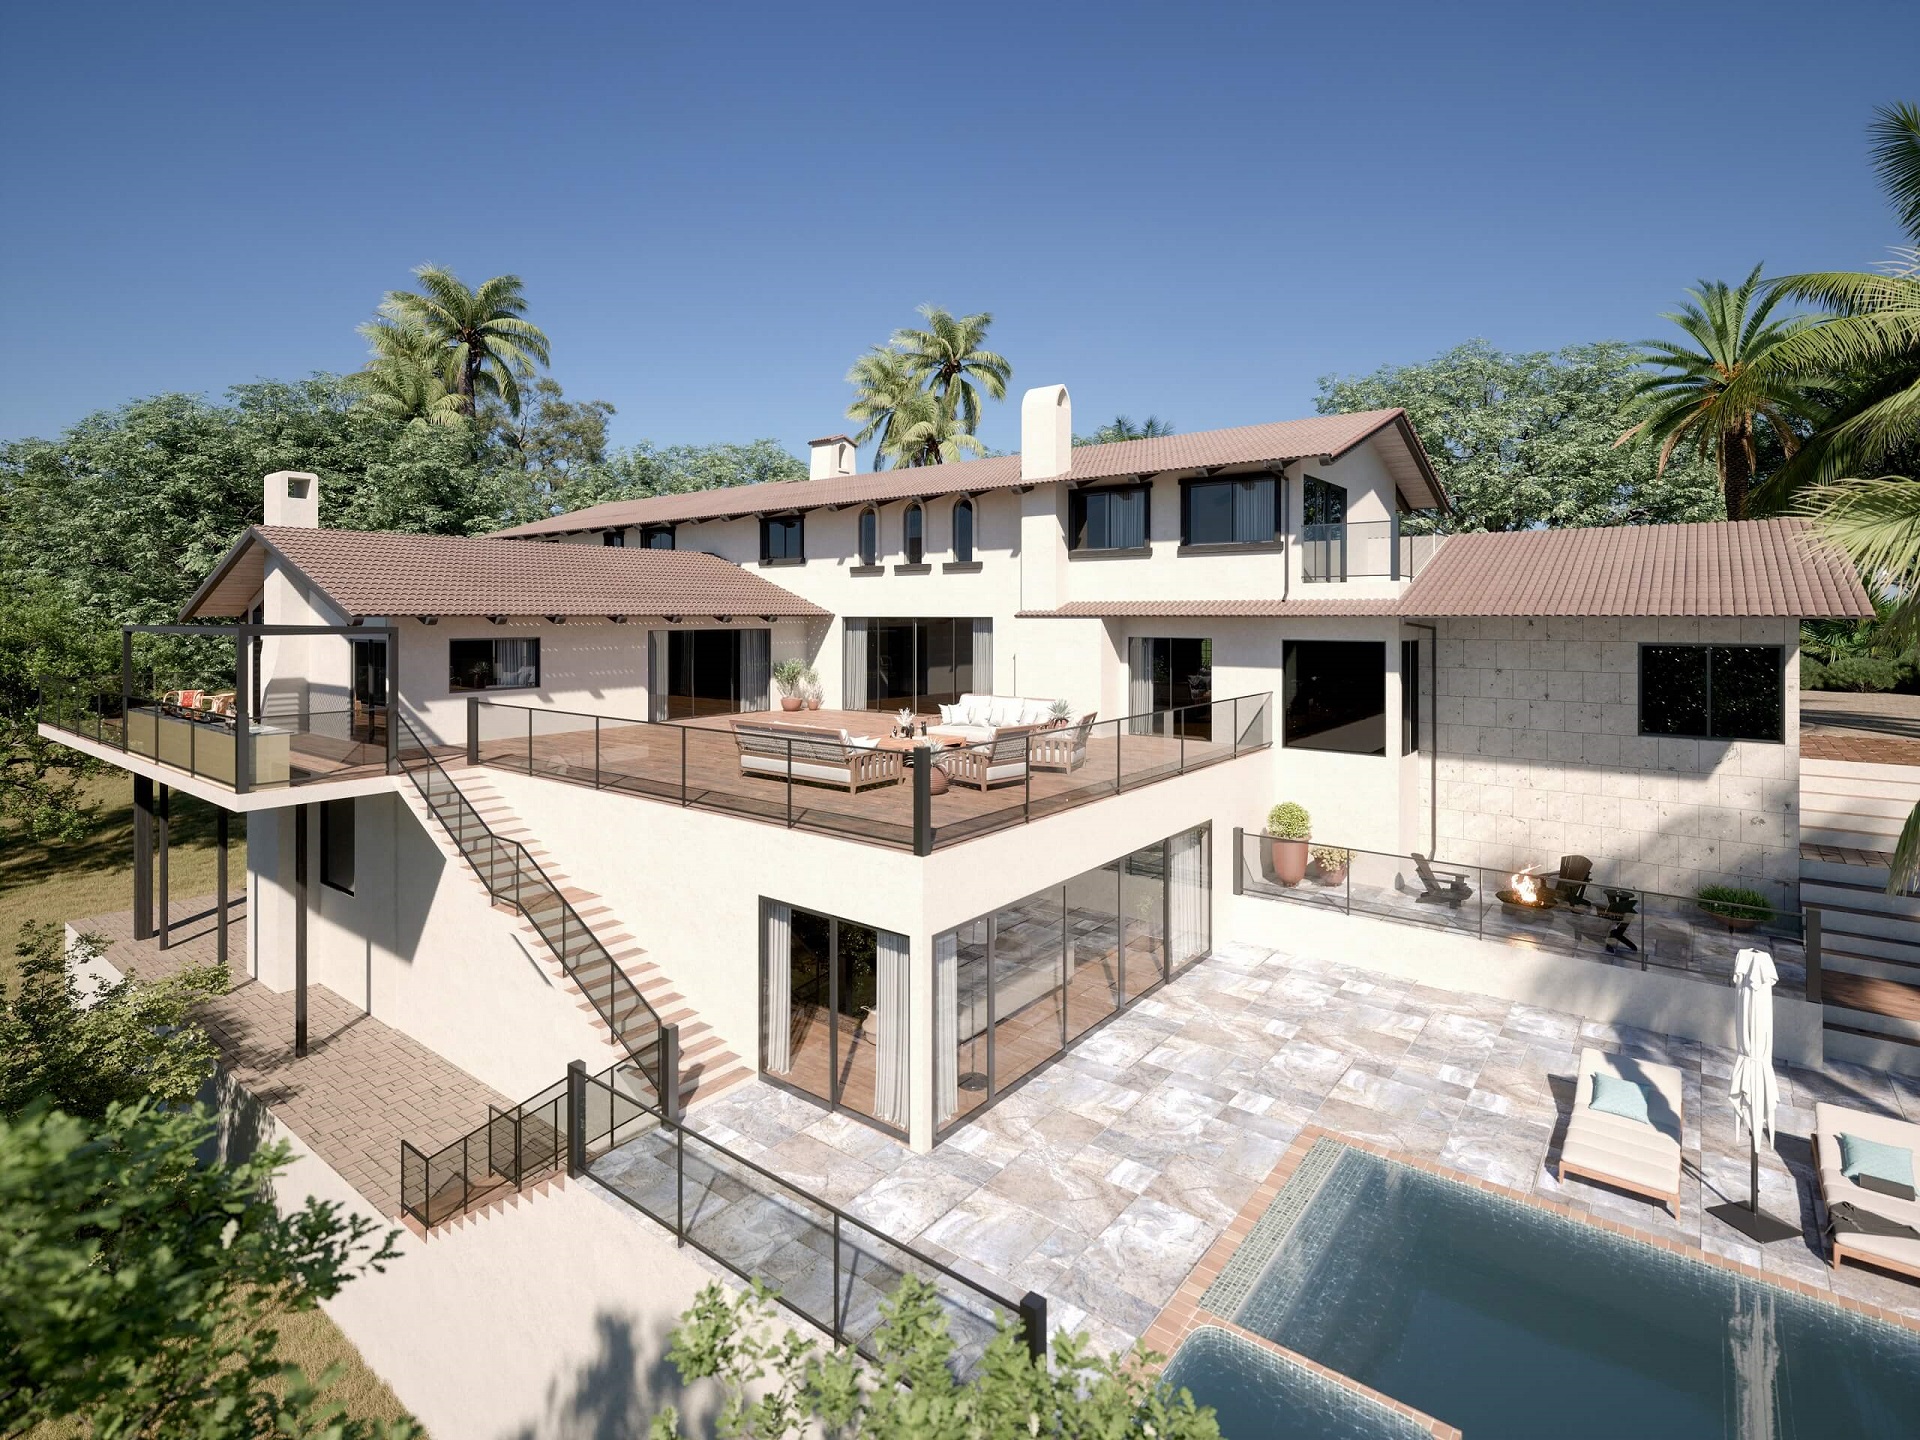 Architectural Visualization of a Home in California